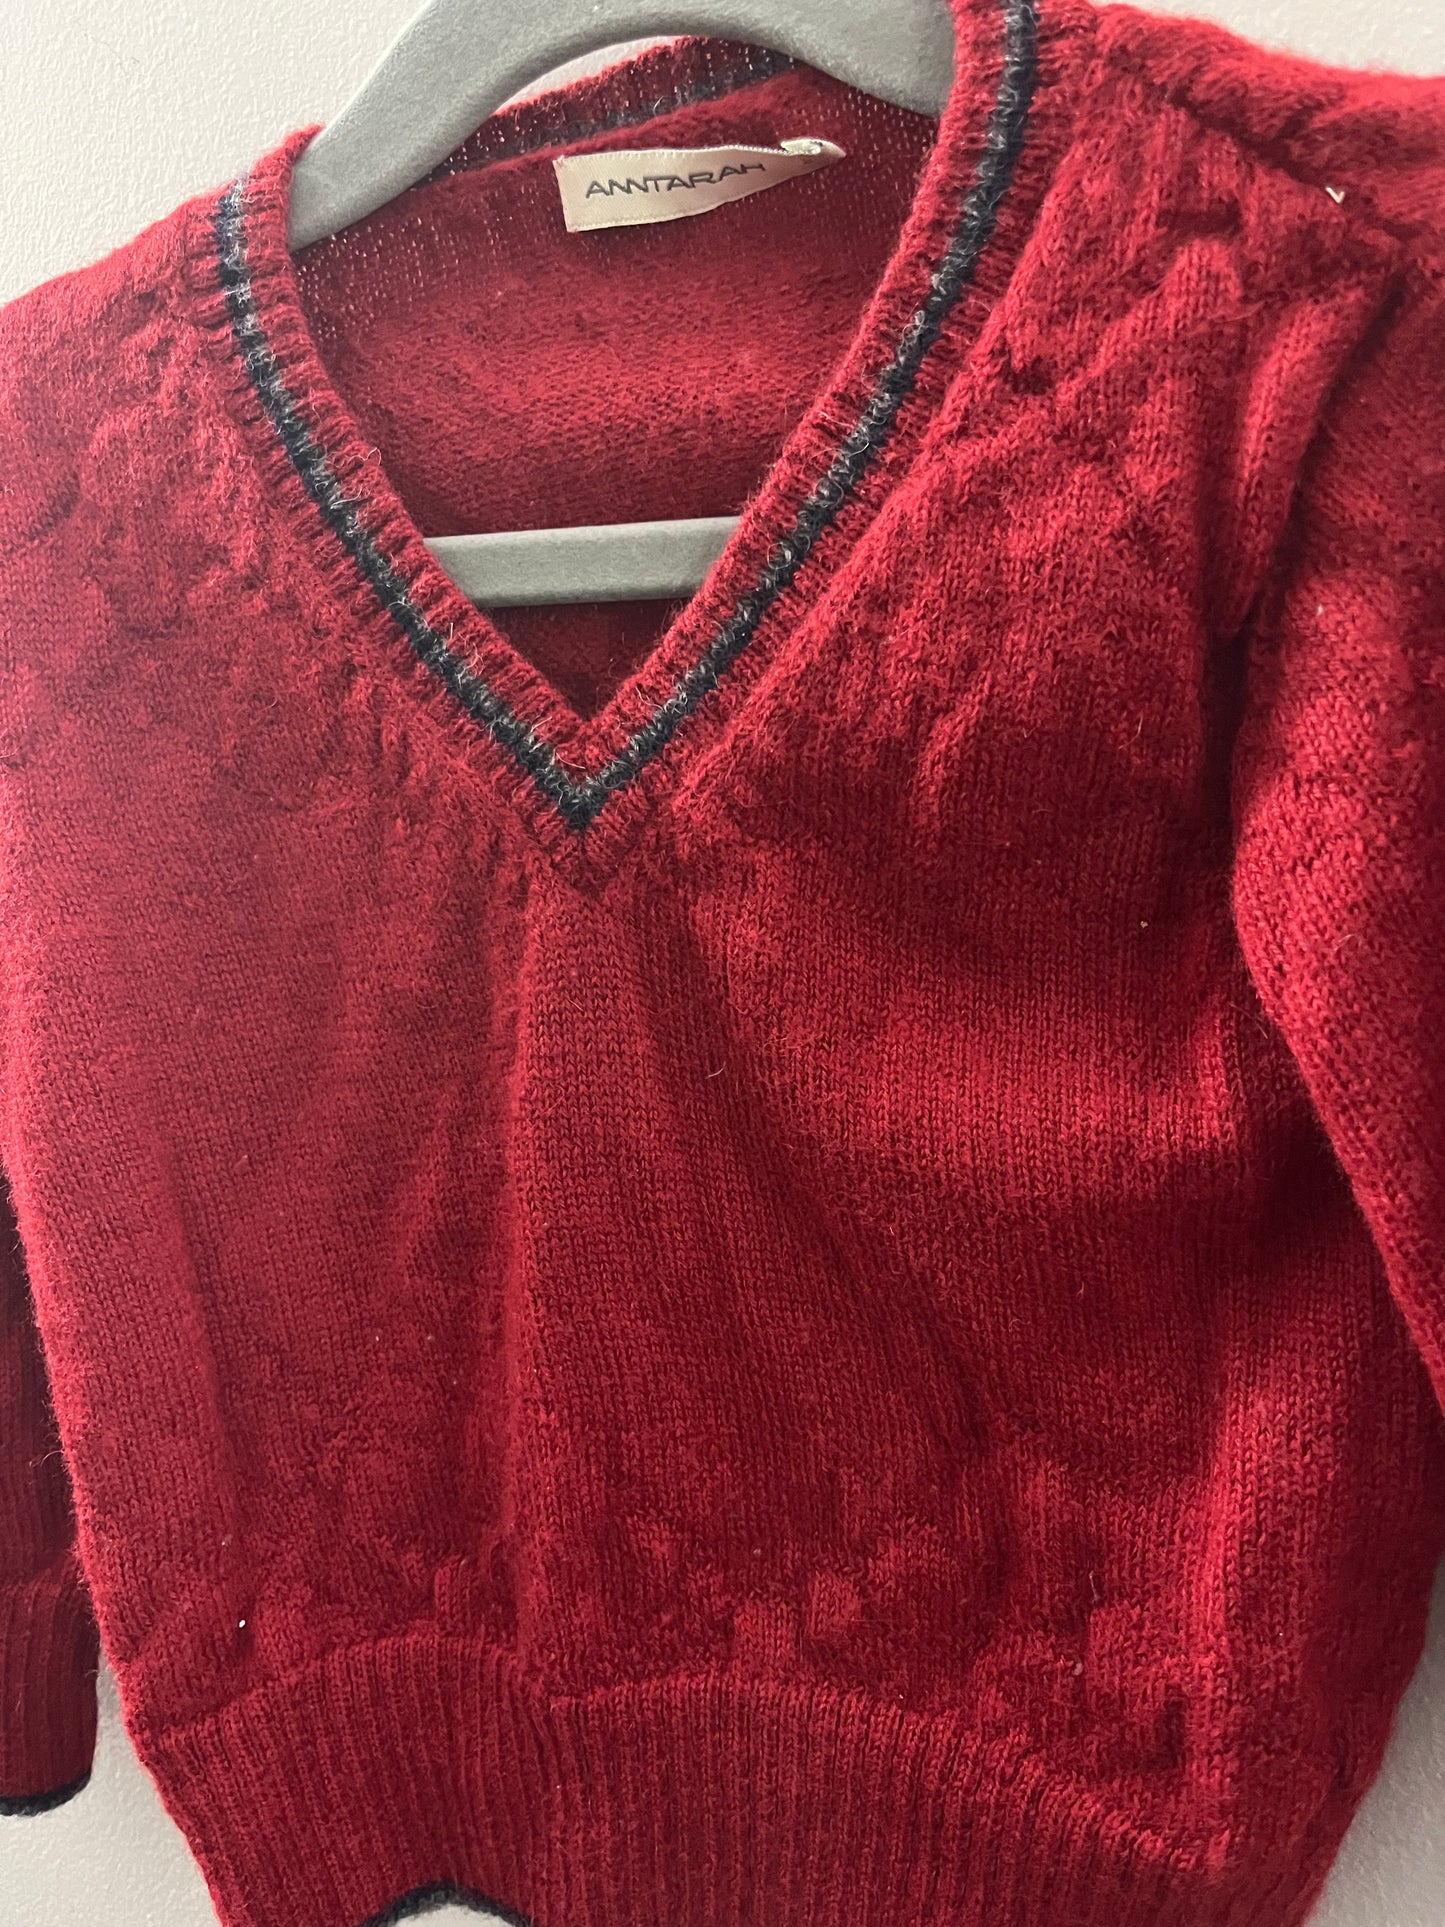 Anntarah 100% Baby Alpaca Textured Knit Sweater (12-18)*